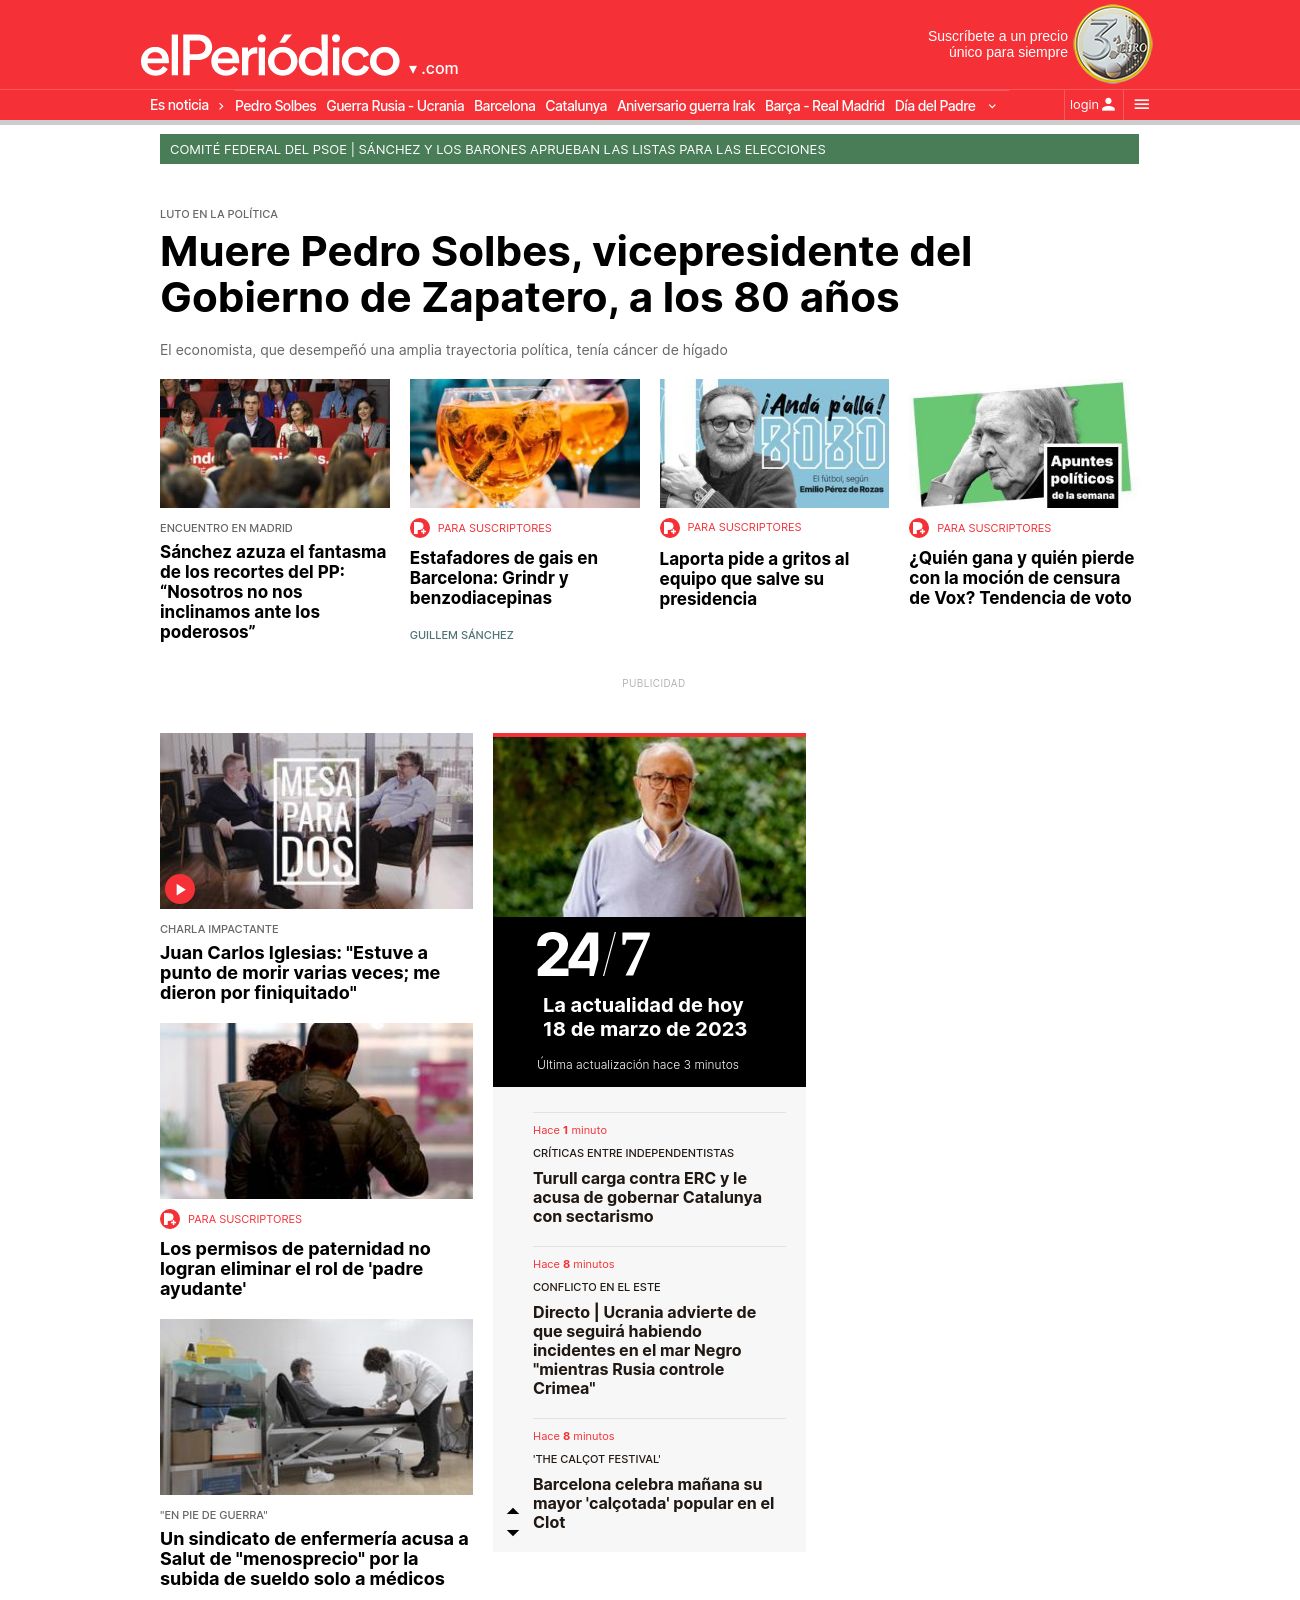 El Periodico at 2023-03-18 14:28:15+01:00 local time